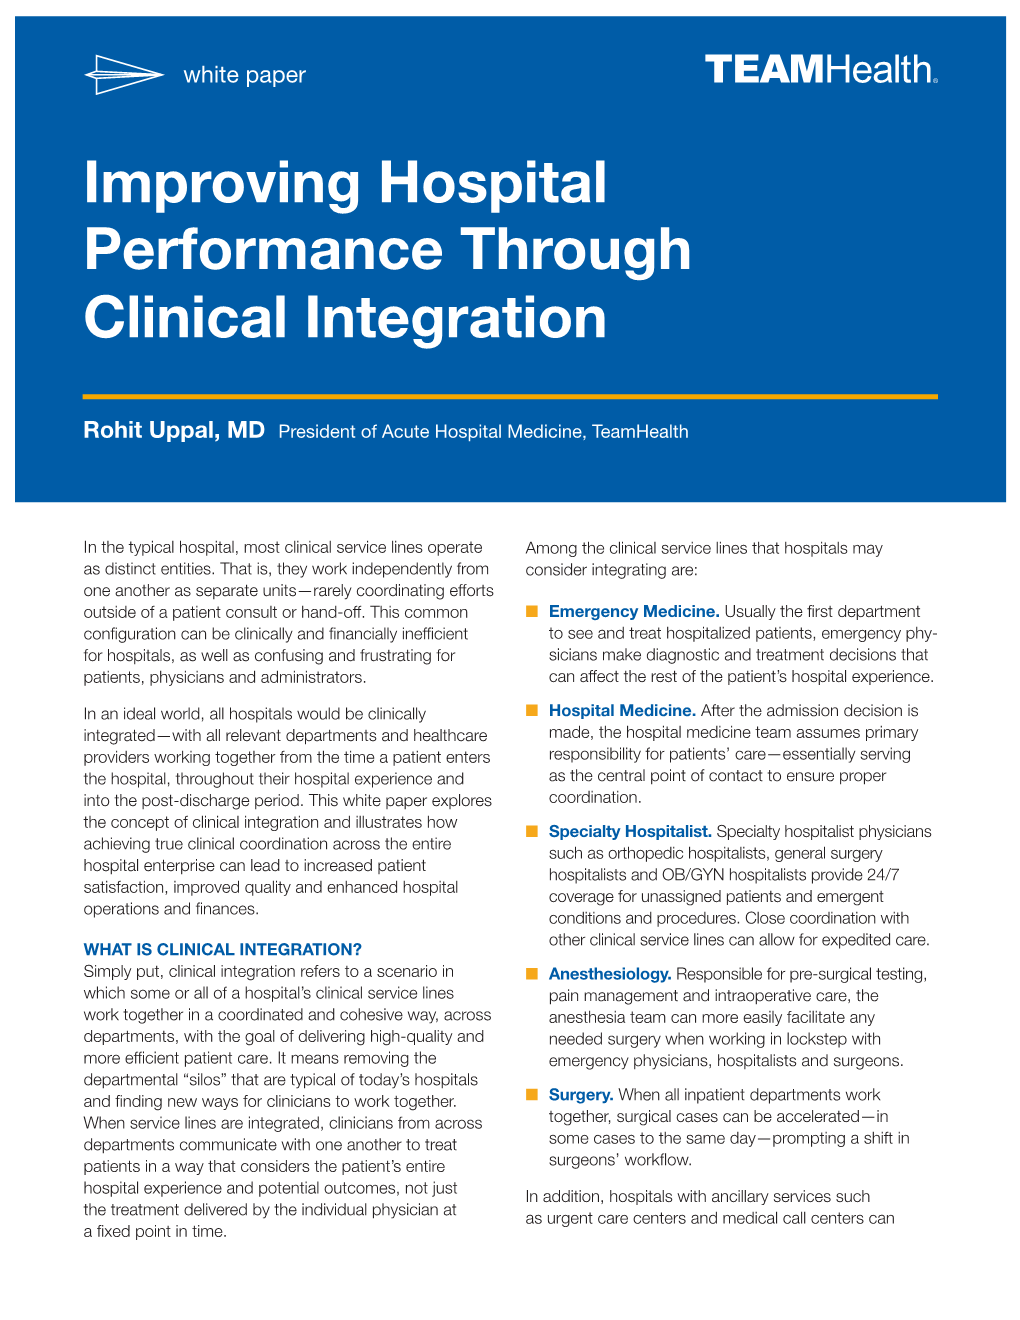 Improving Hospital Performance Through Clinical Integration